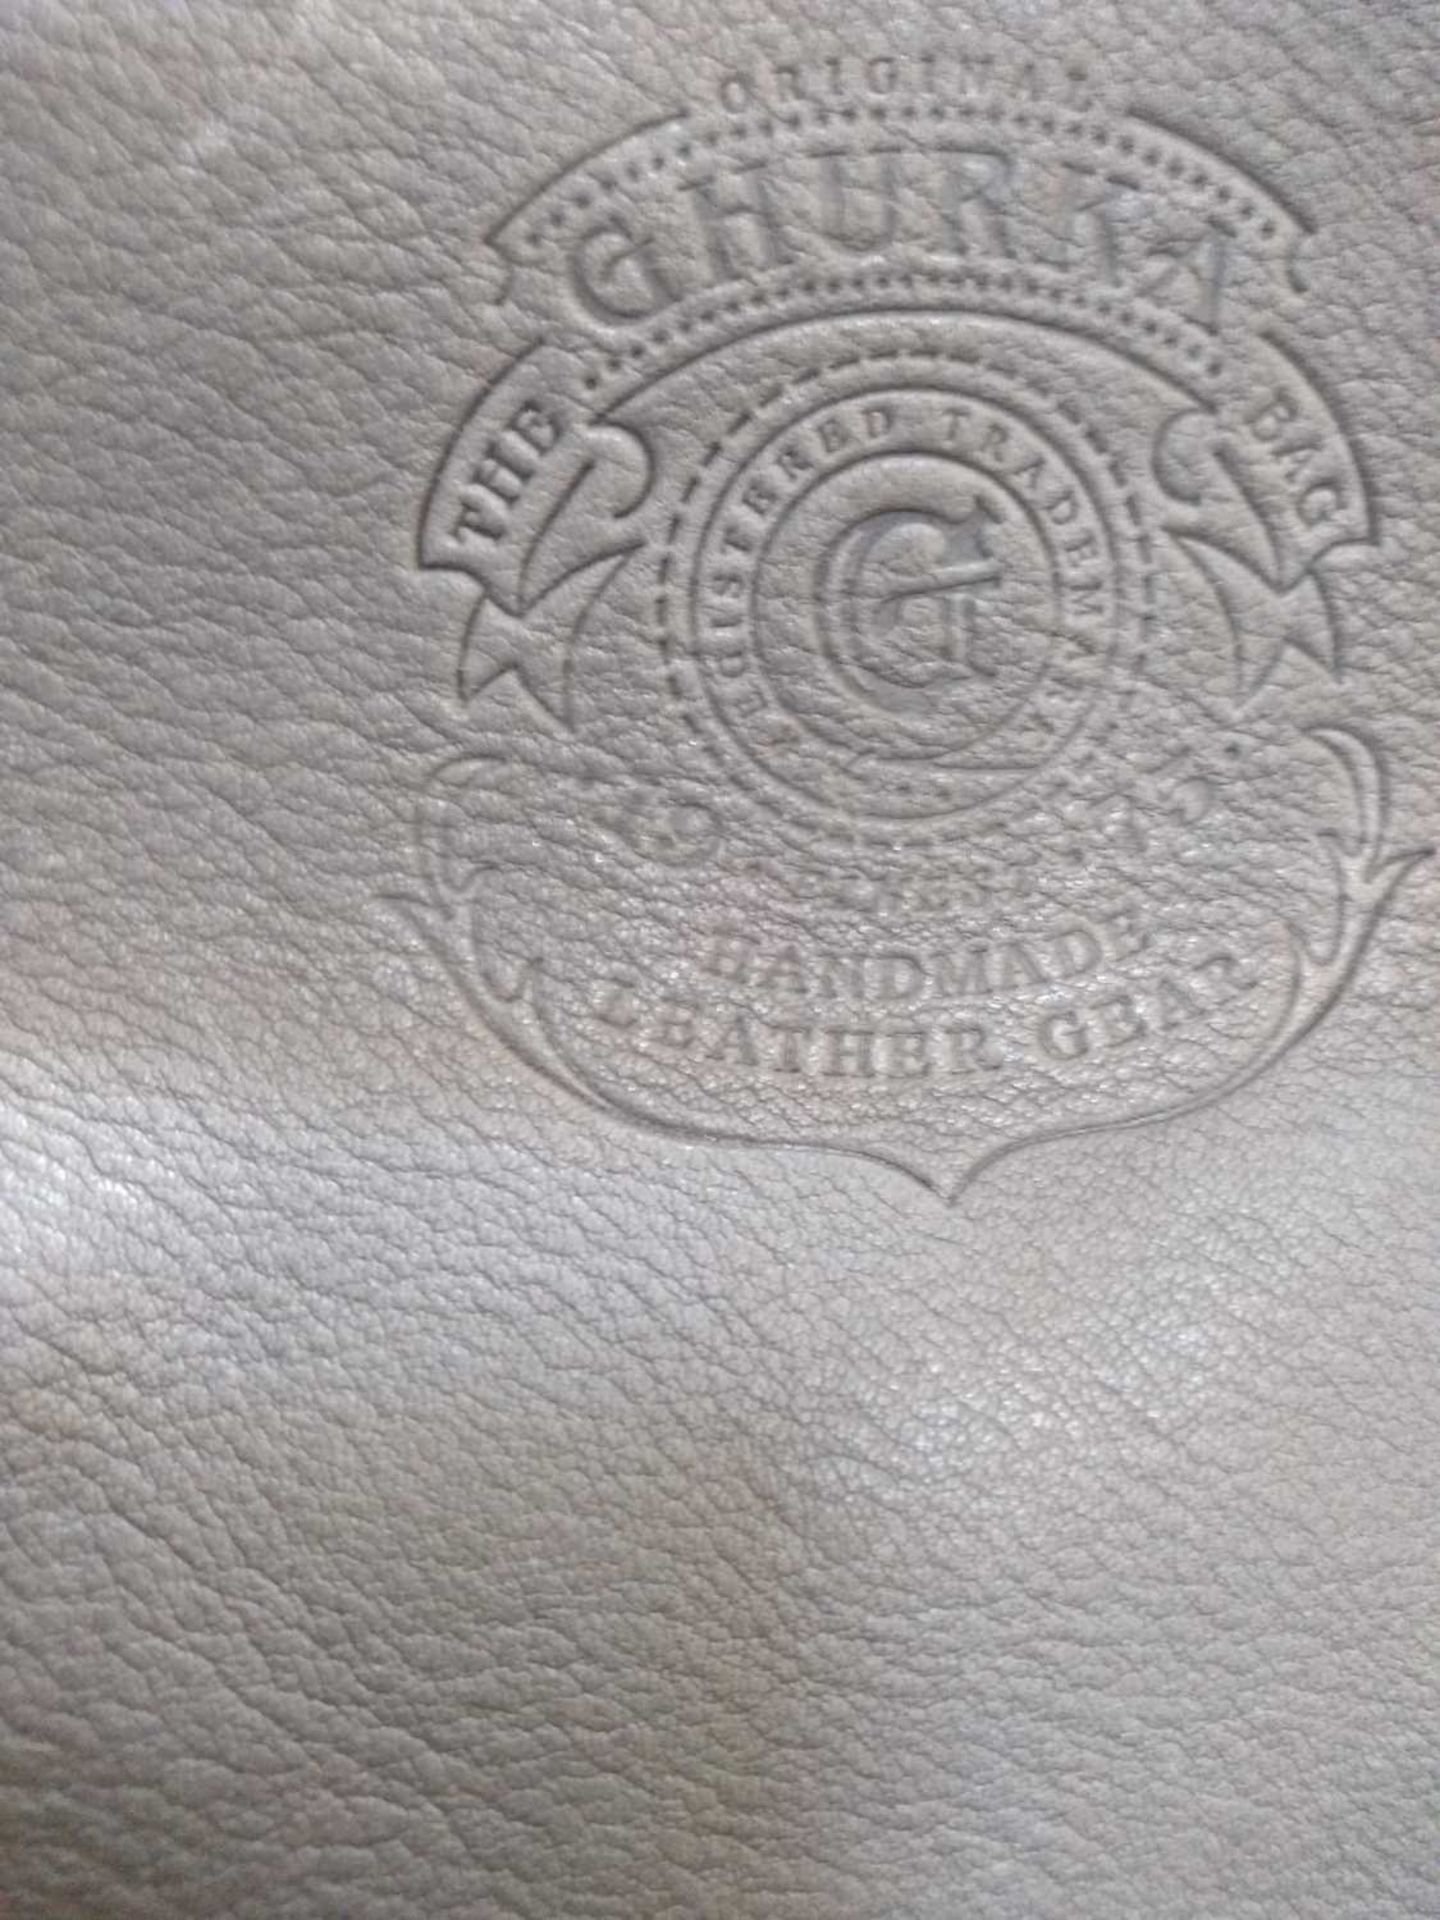 A Ghurka grey leather travel bag, - Image 2 of 13